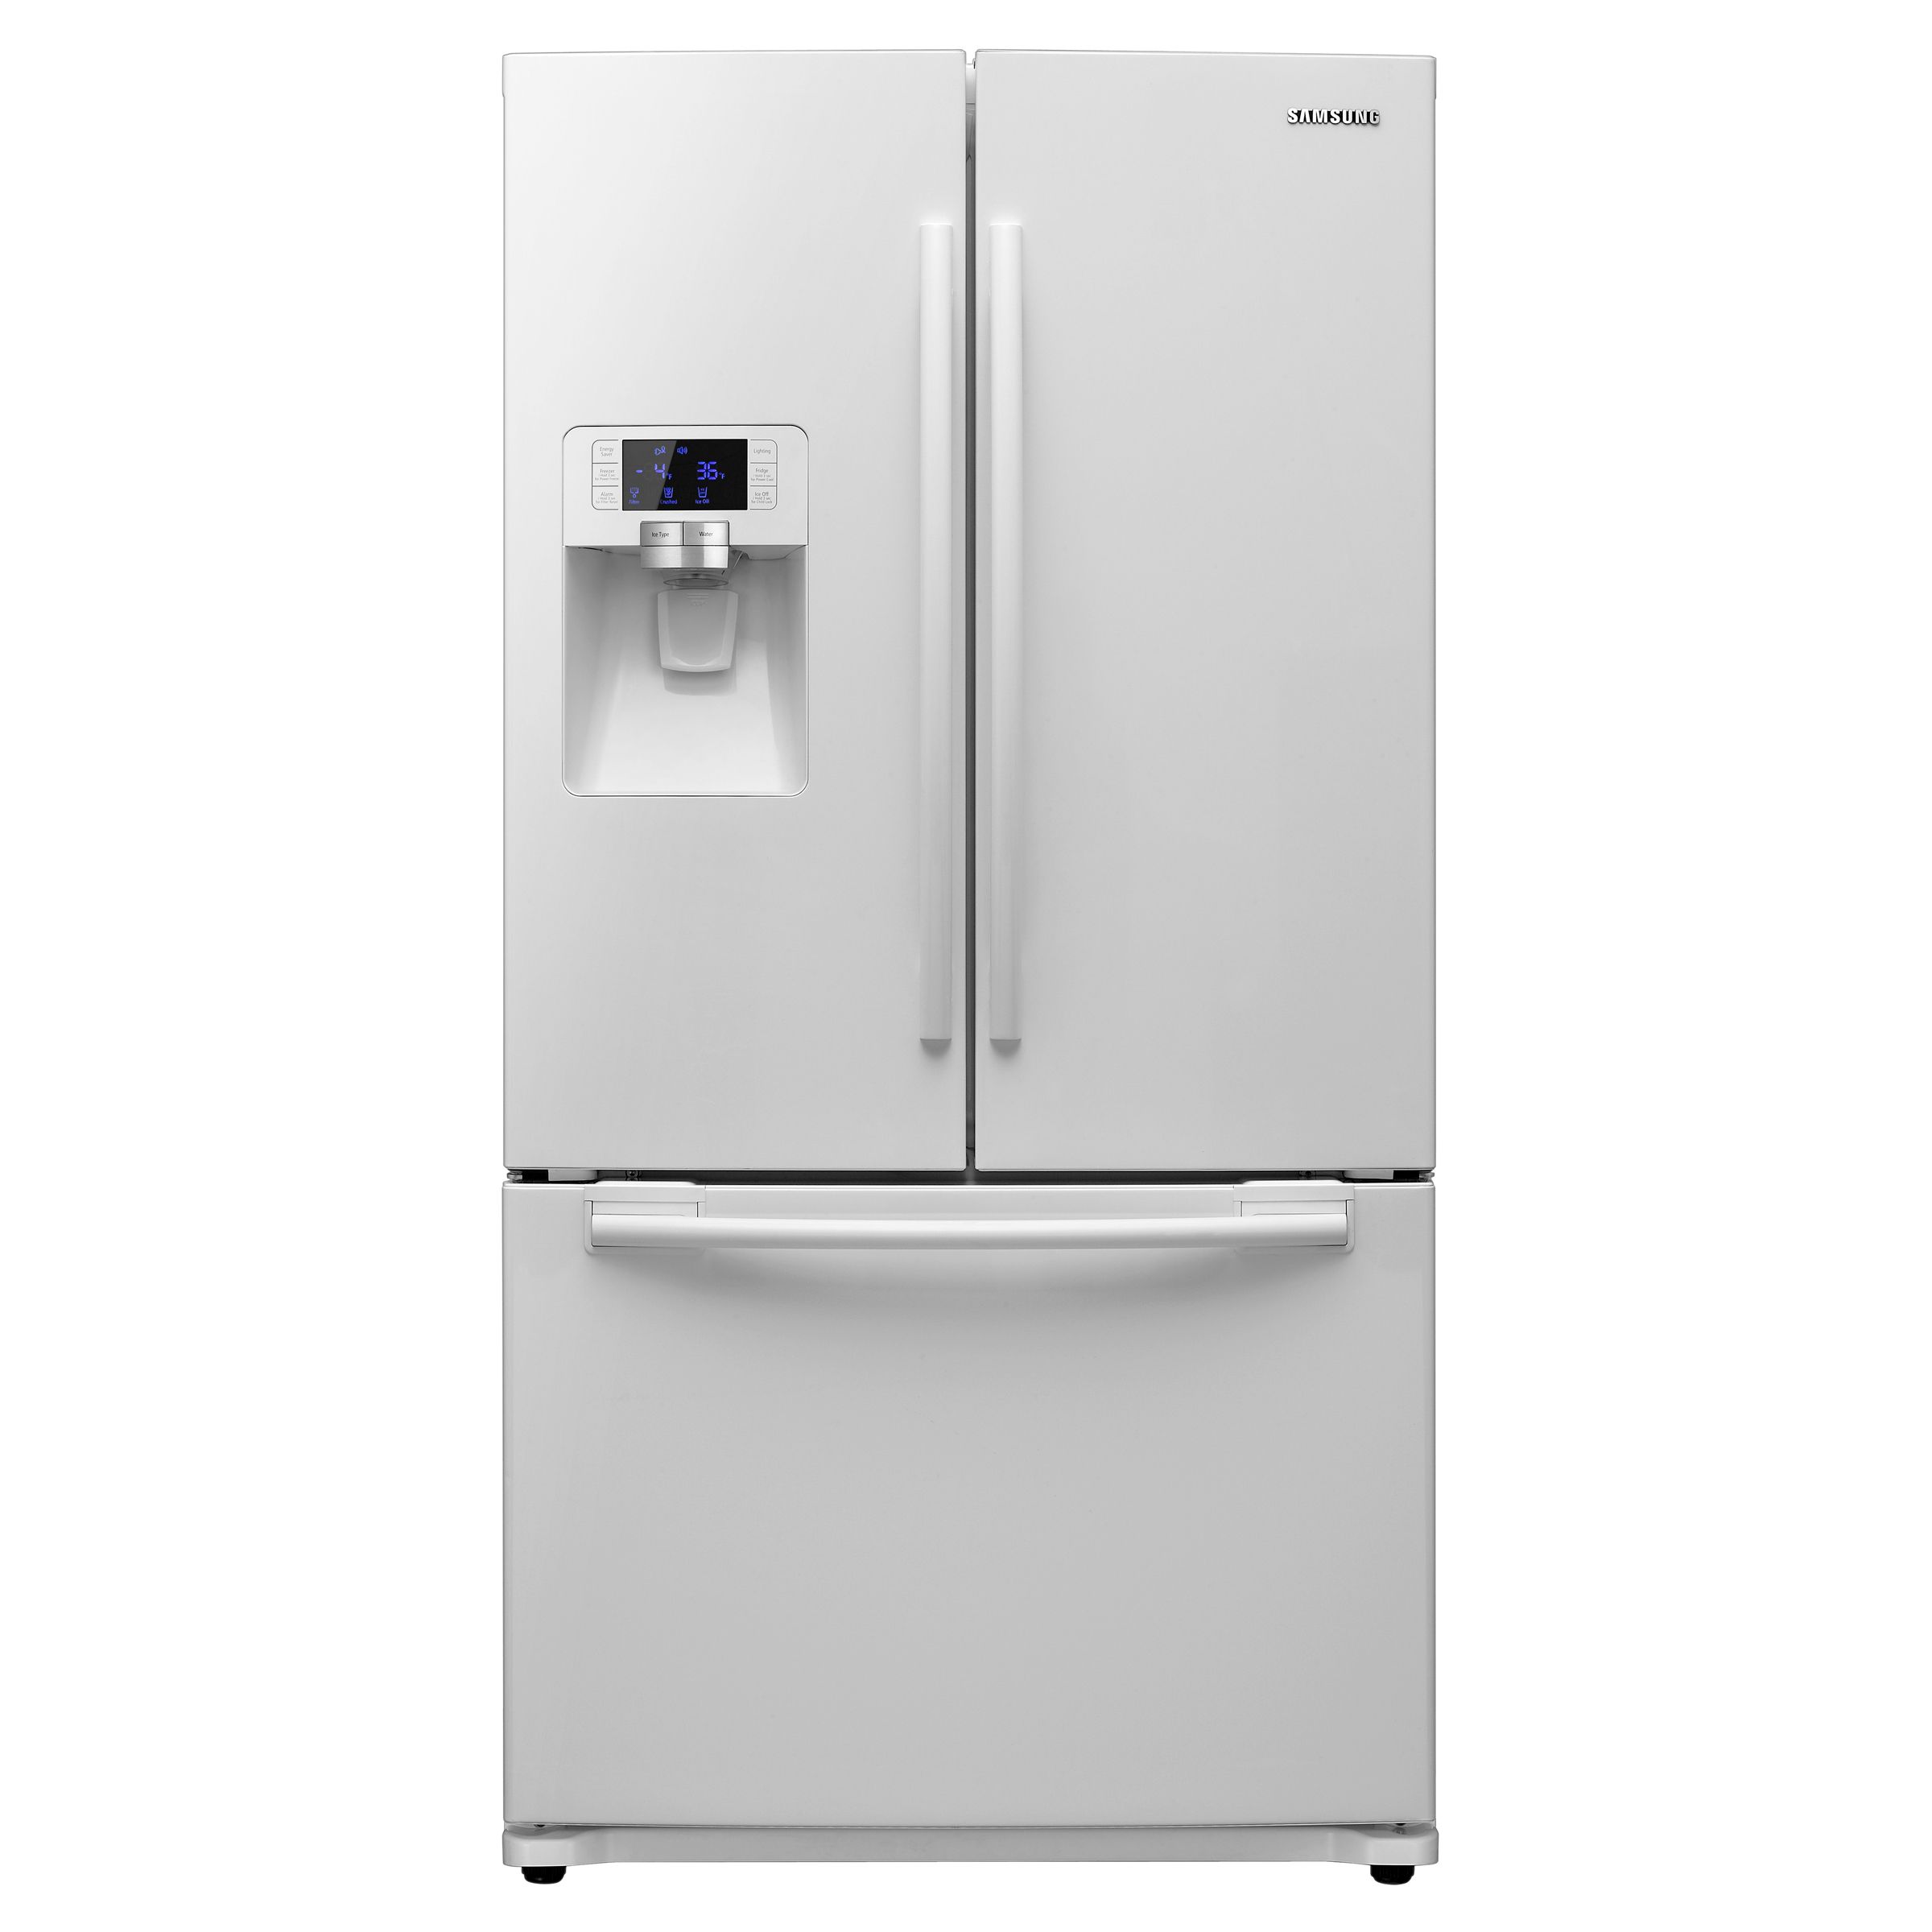 Samsung 29.0 cu. ft. French-Door Refrigerator w/ Premium External Water